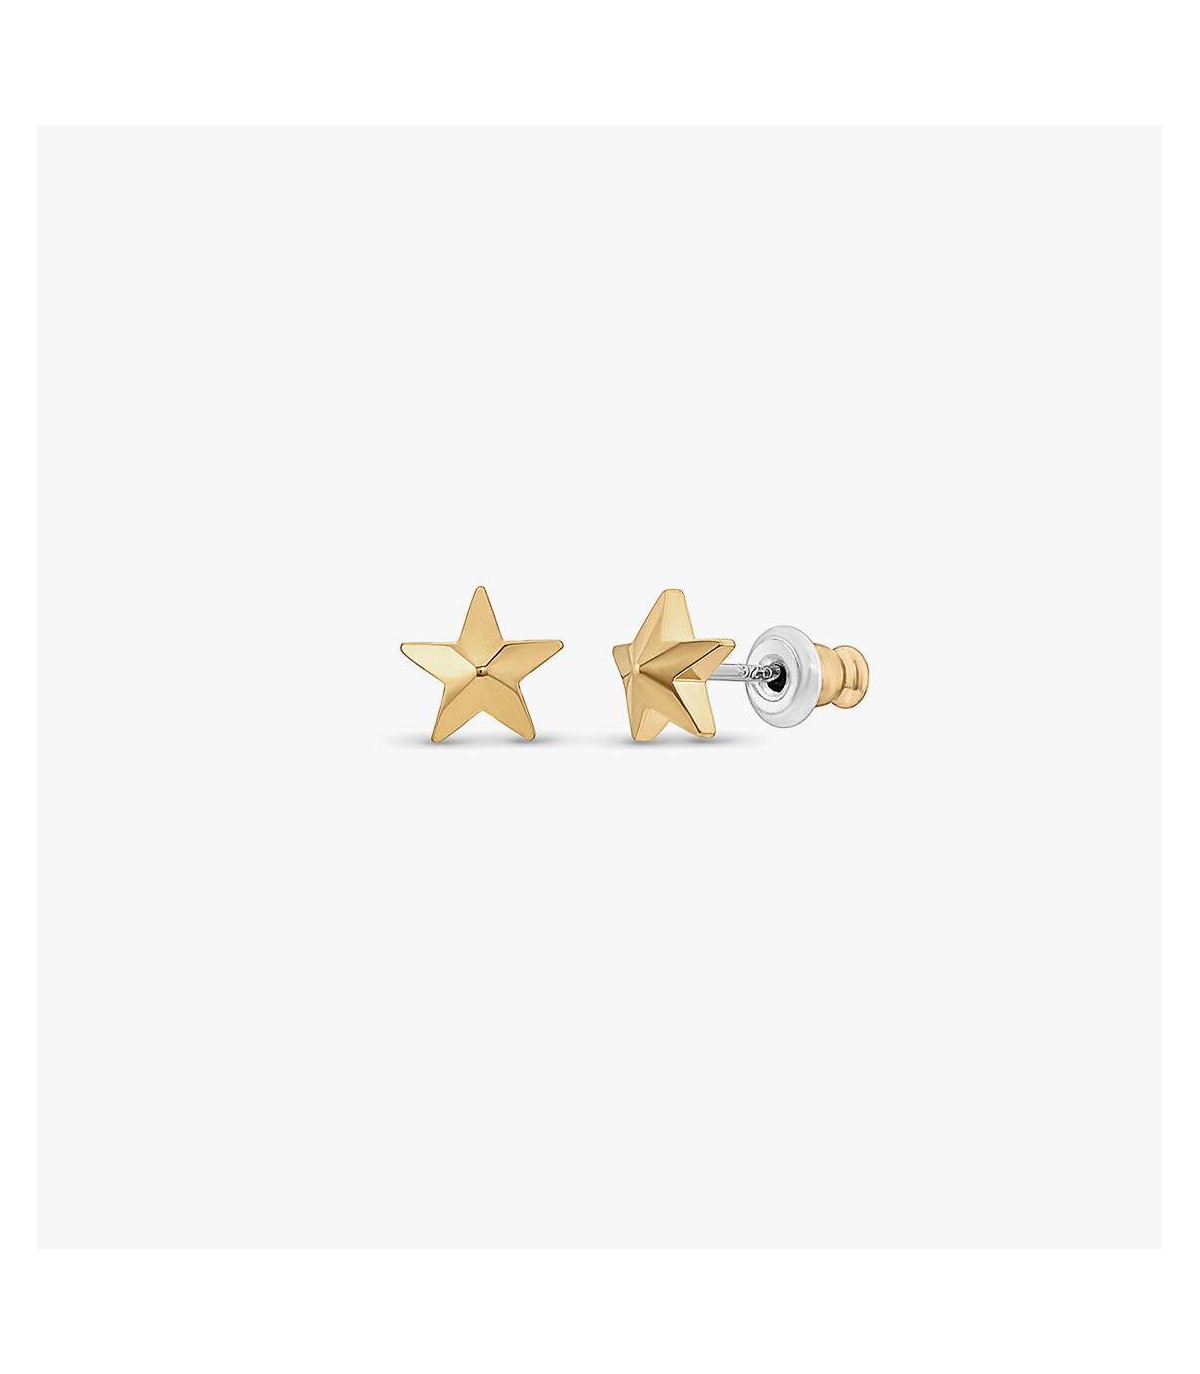 Star Stud Earrings - Gold